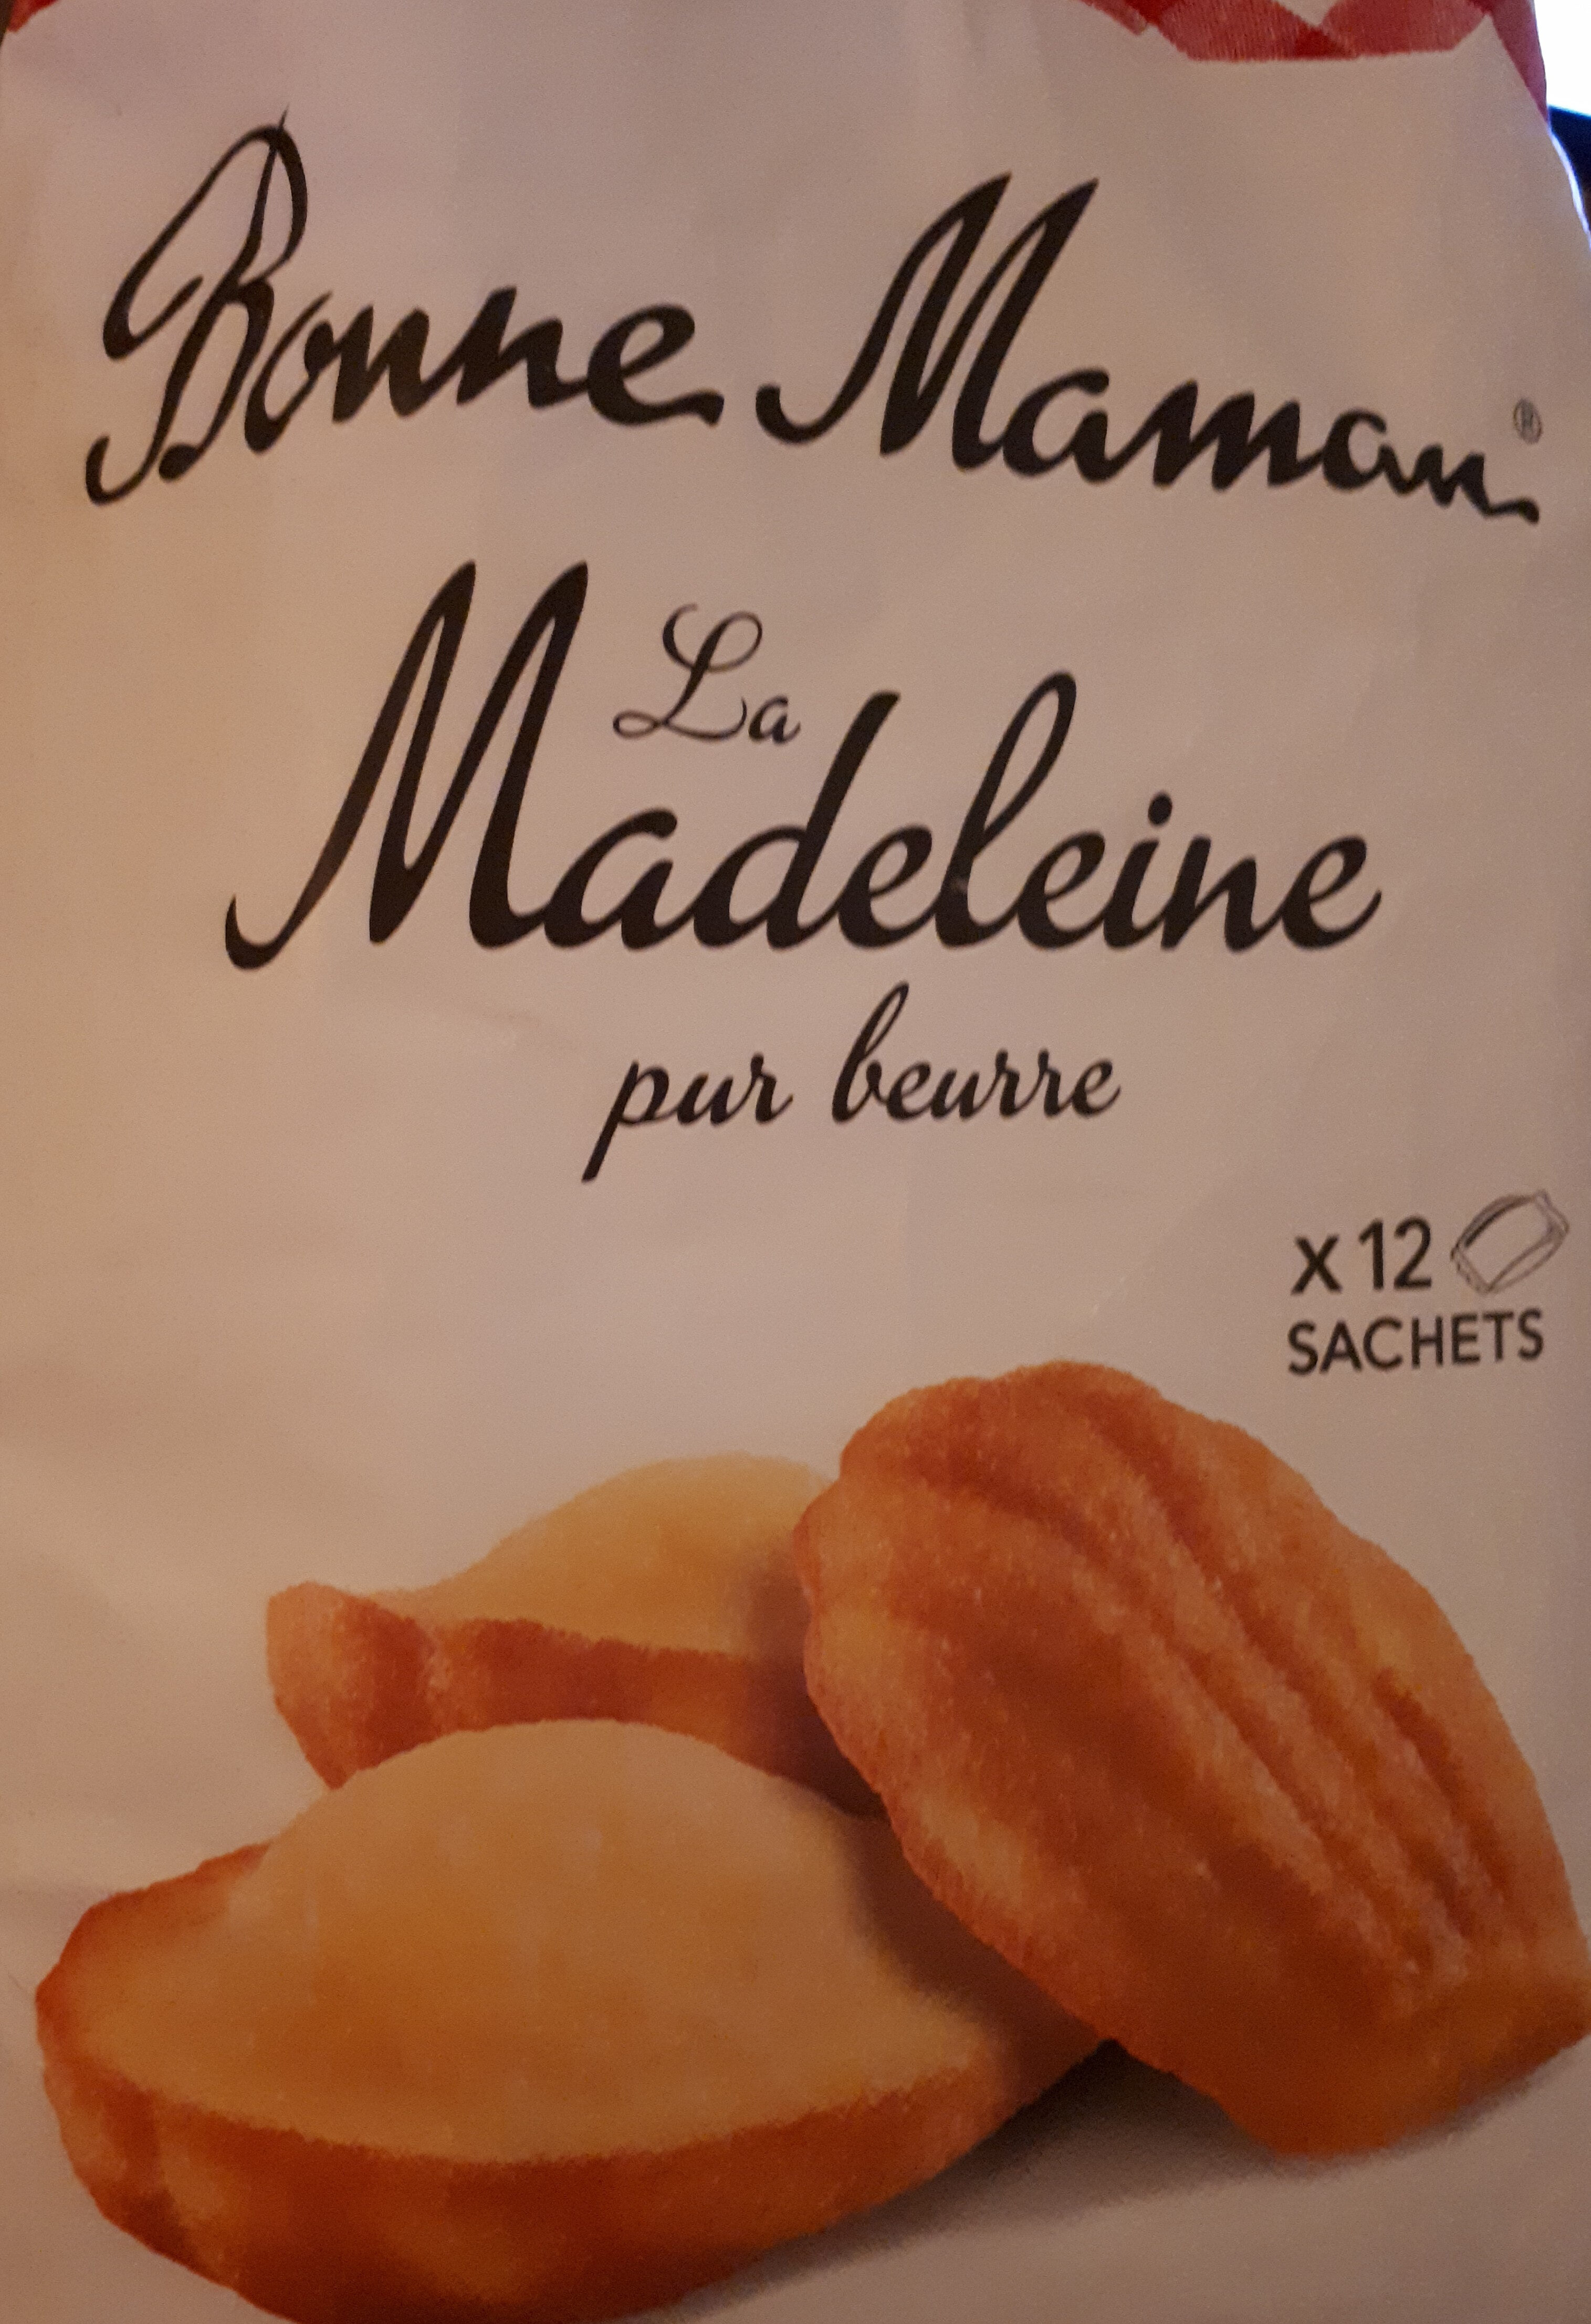 La Madeleine Pur beurre - Product - fr